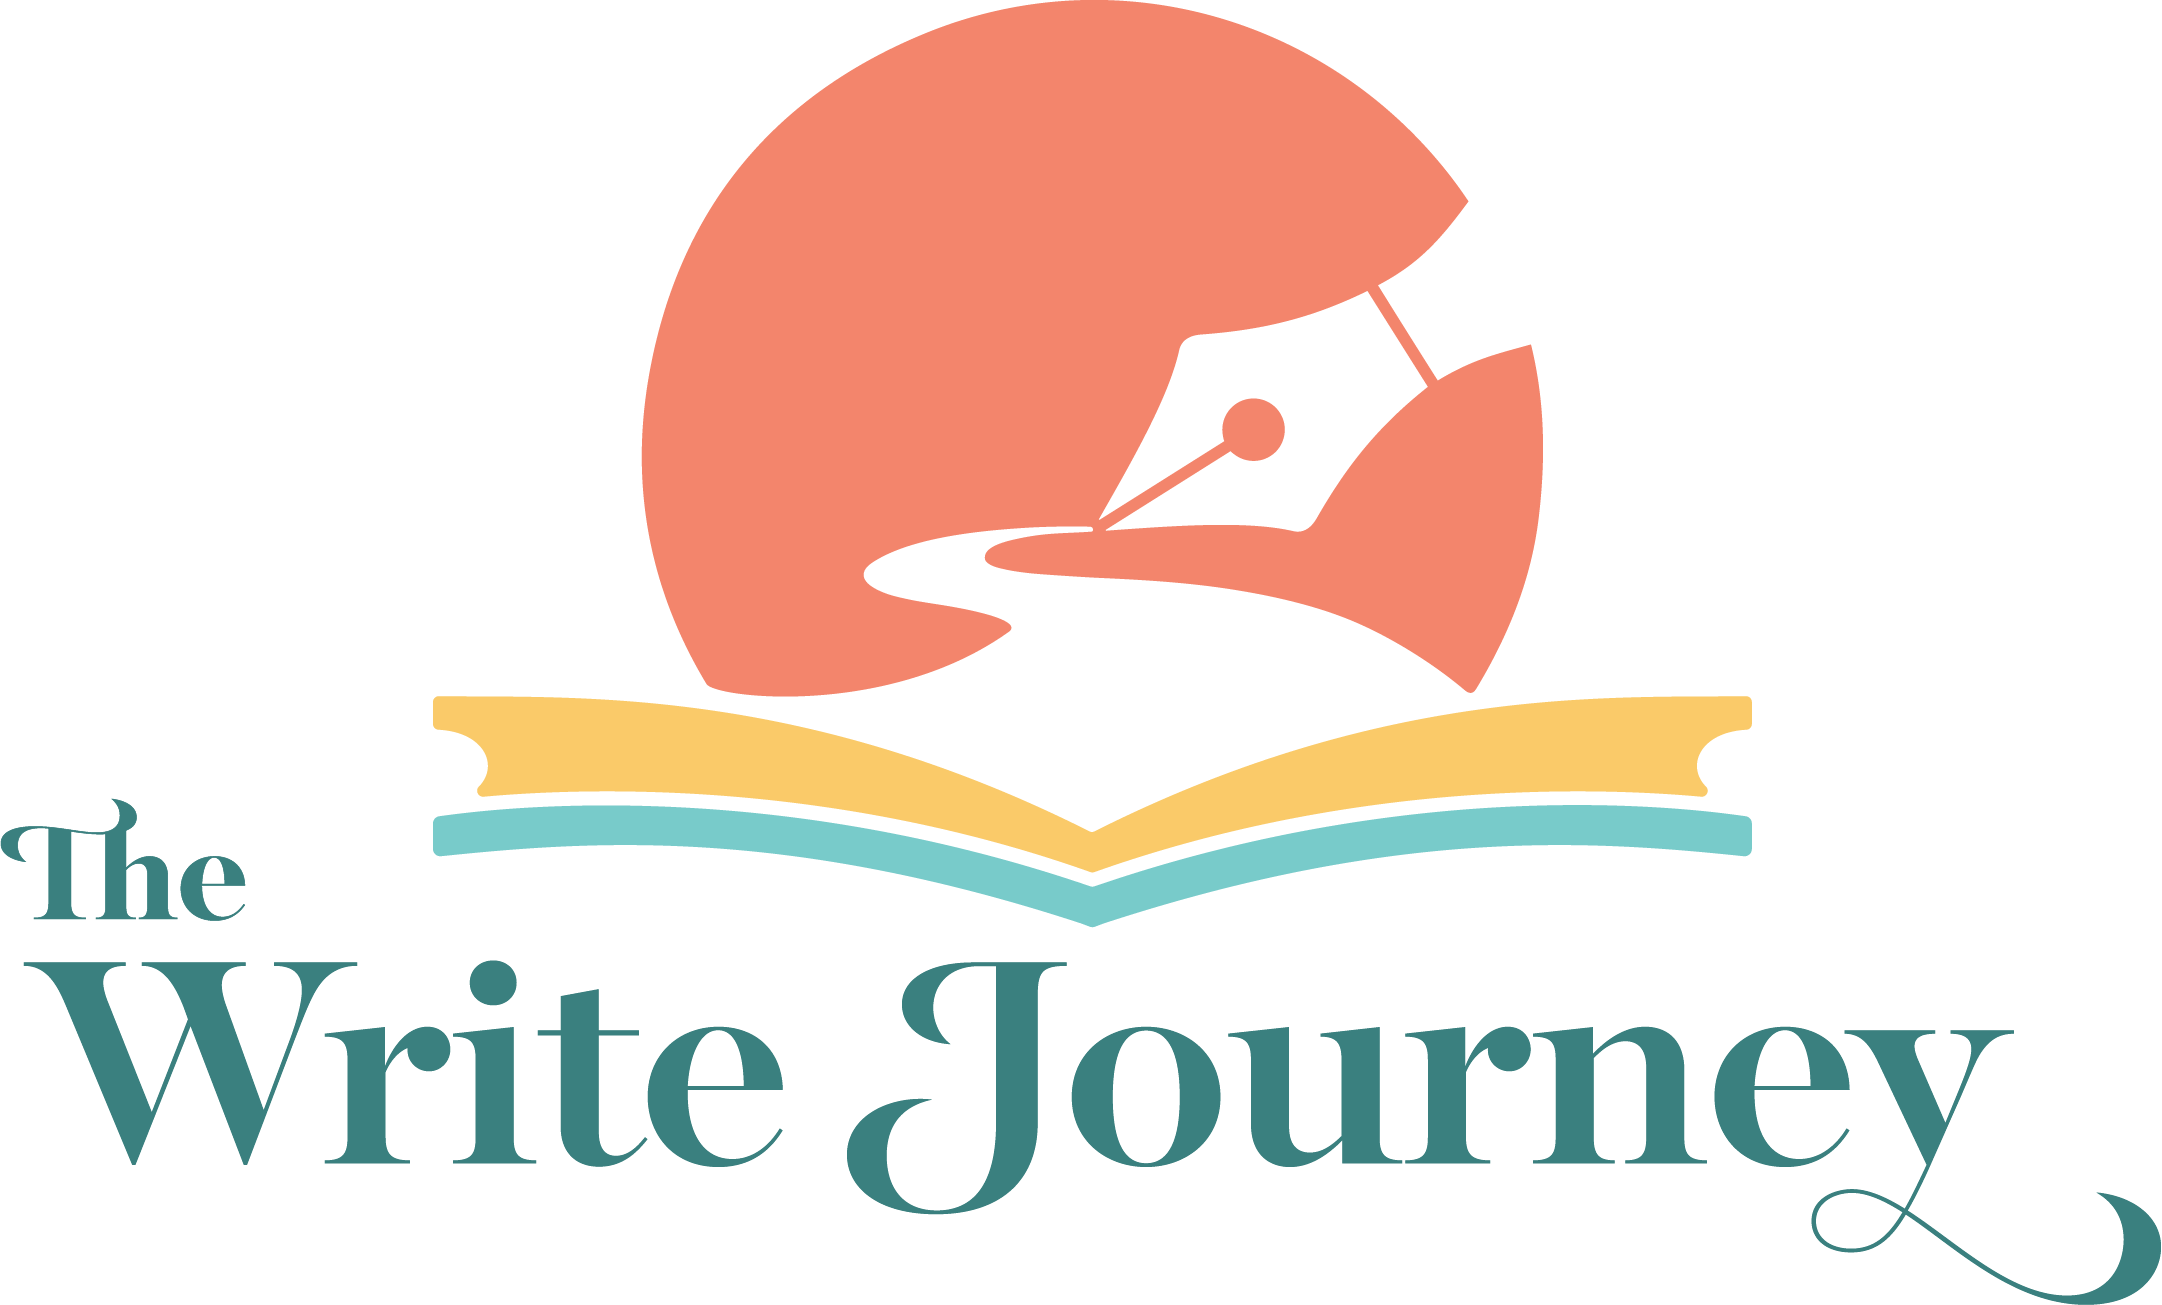 The Write Journey logo